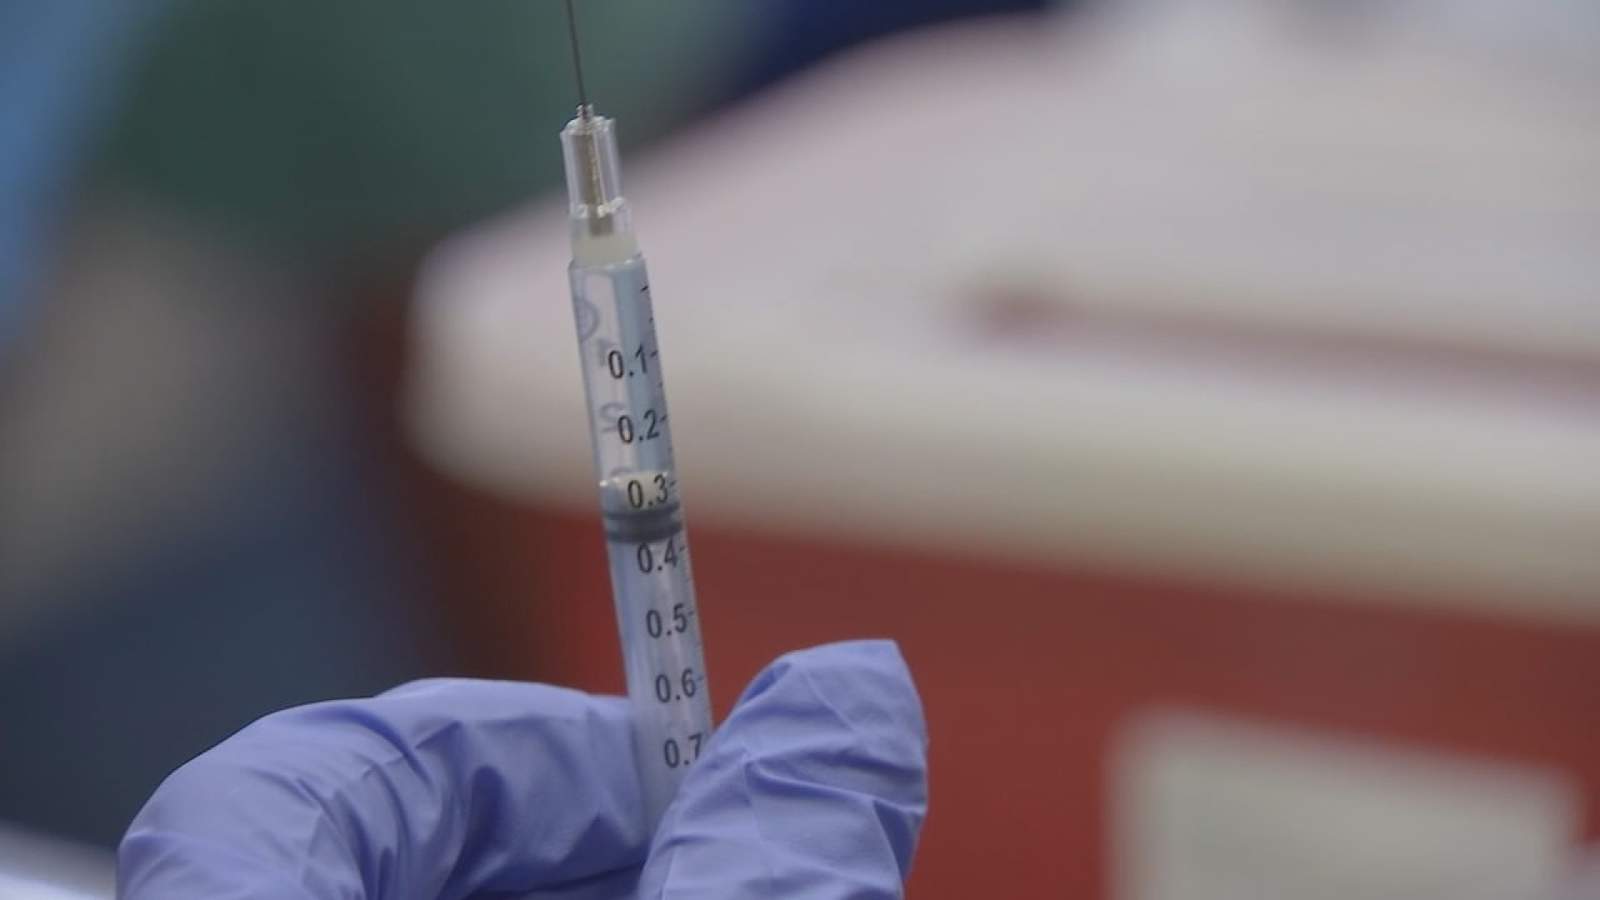 Wayne County accepts walk-ups at all of its COVID-19 vaccine clinics